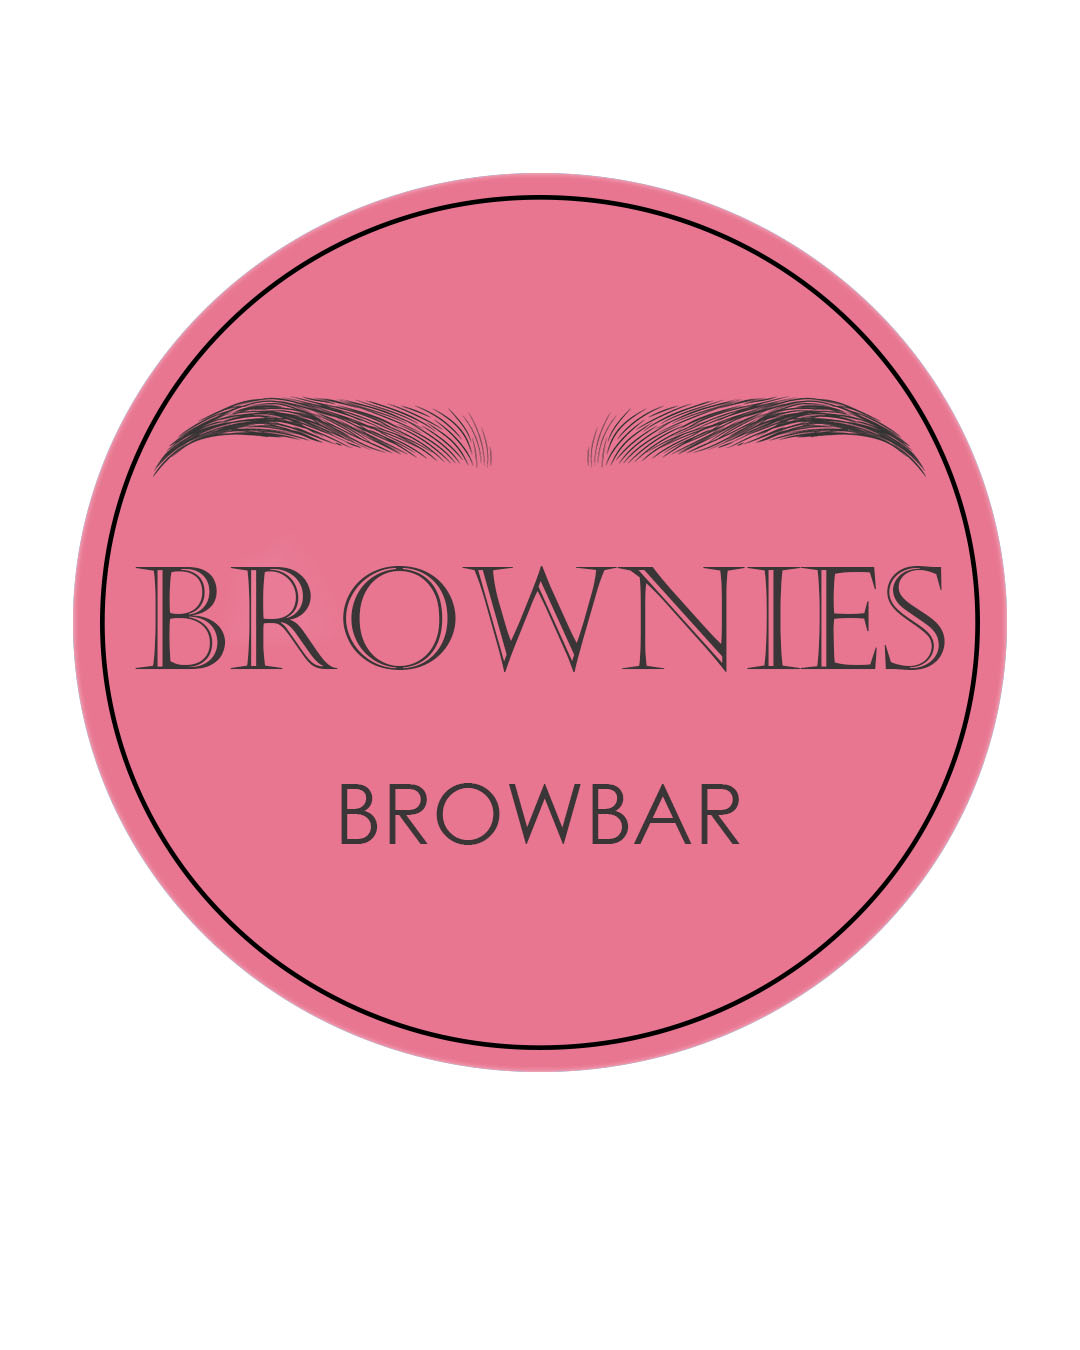 Brownies Browbar